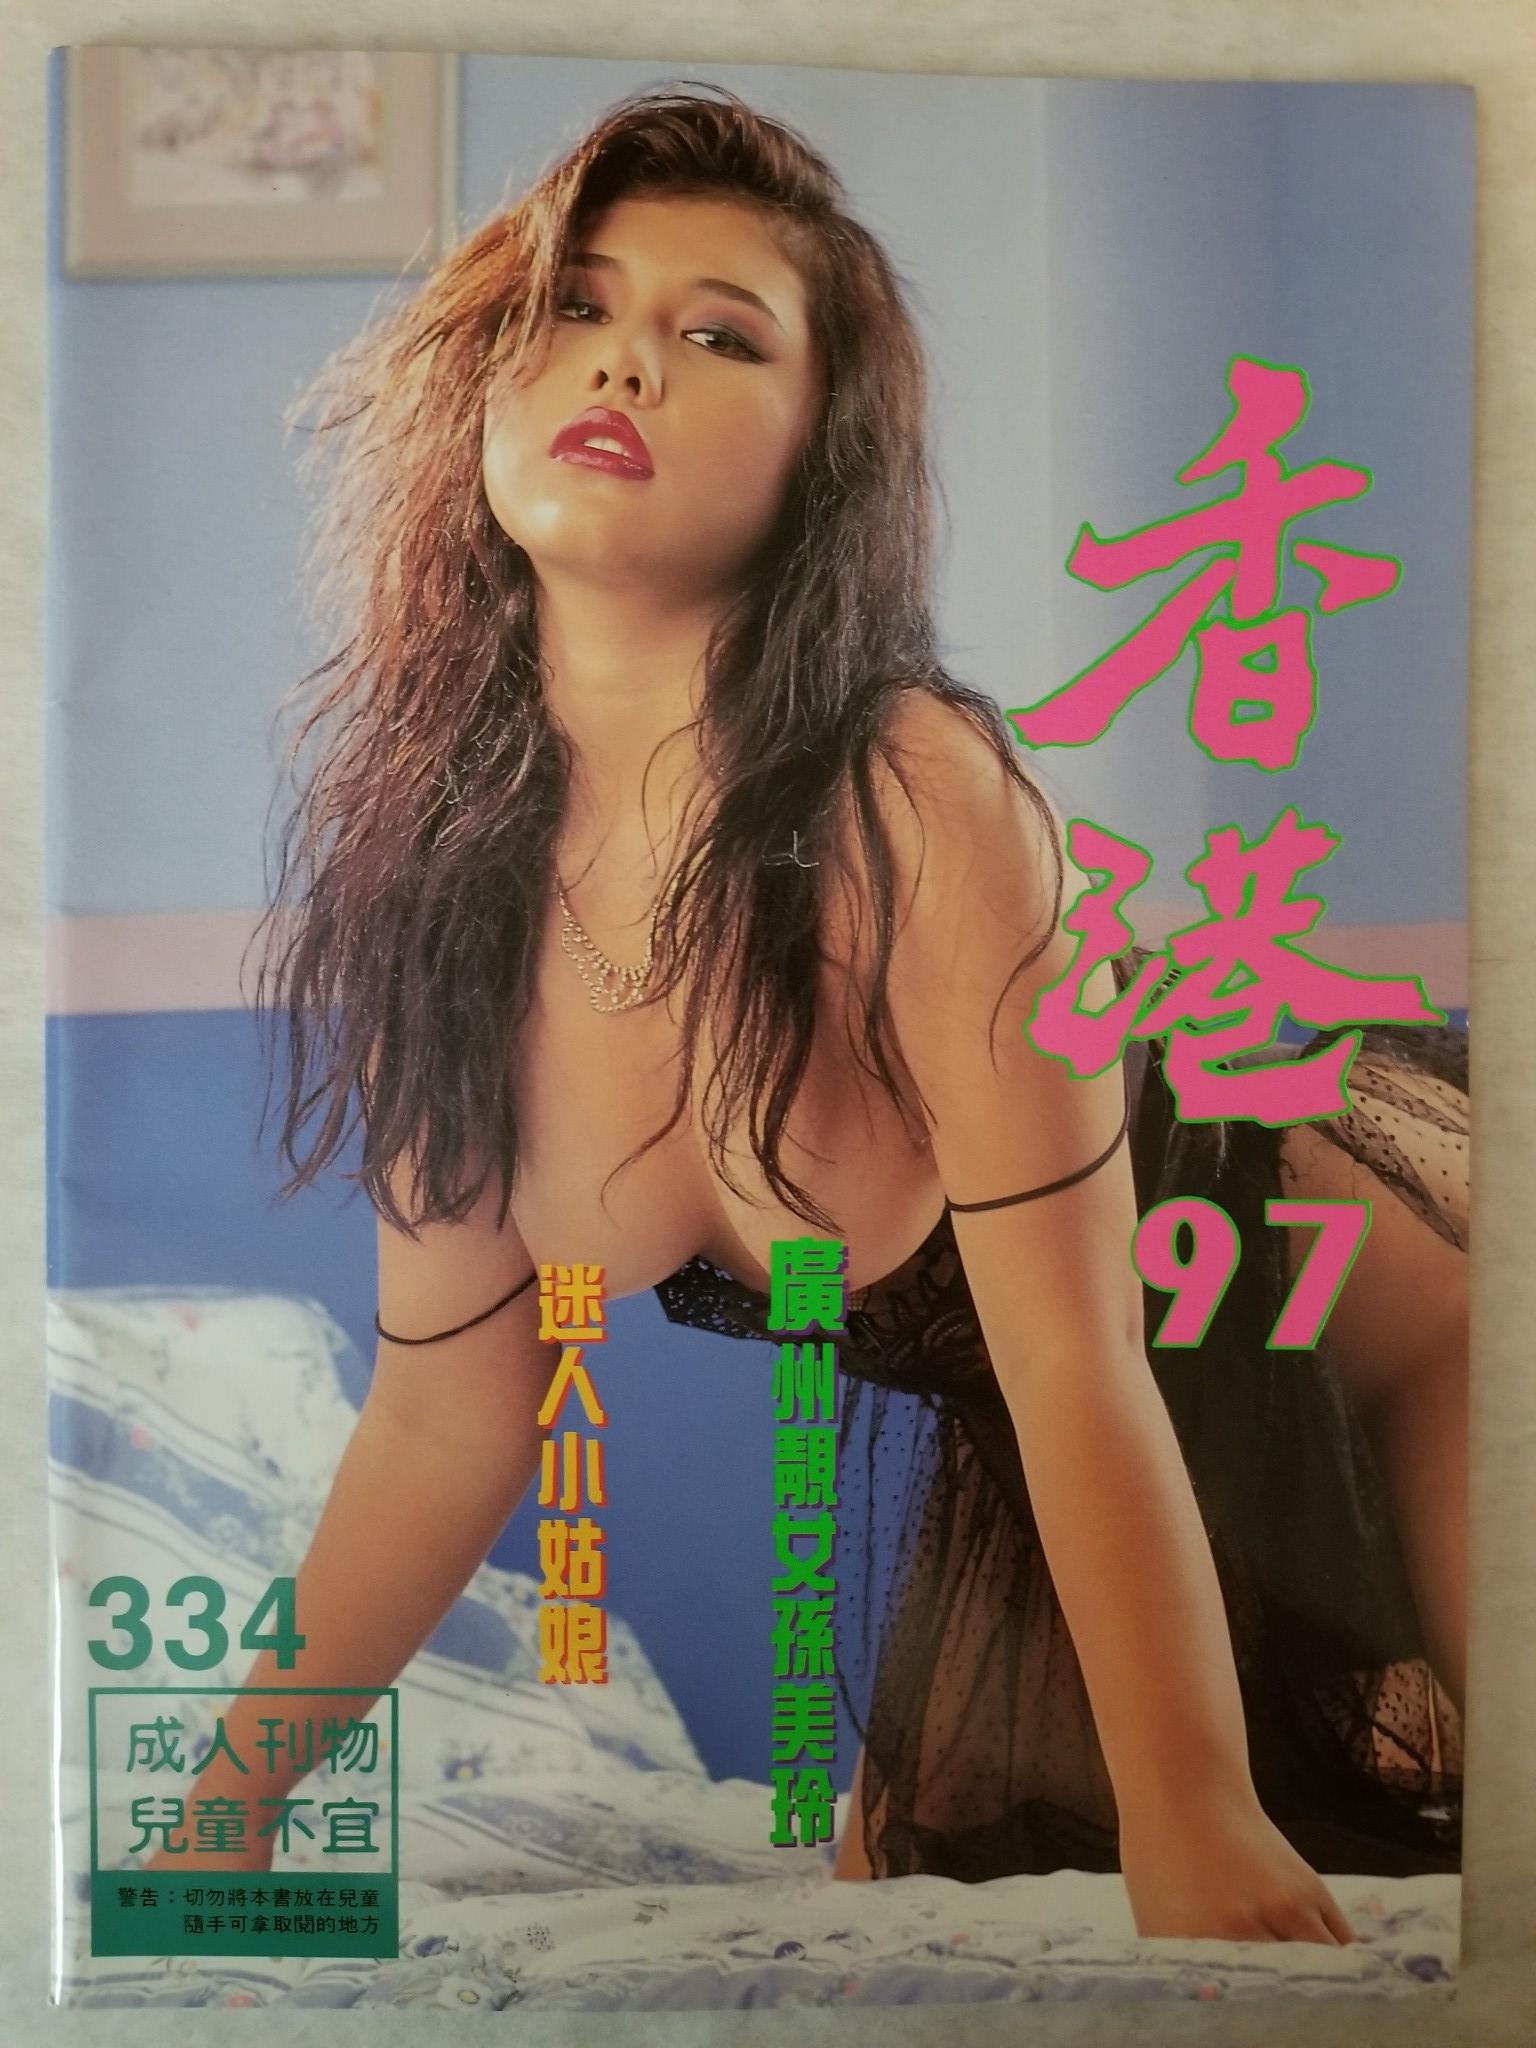 Hong Kong Porn Magazine - Hong Kong 97 No. 334 - Foreign Chinese Magazine, Asian Girls - Adult M â€“  Discreet Retail